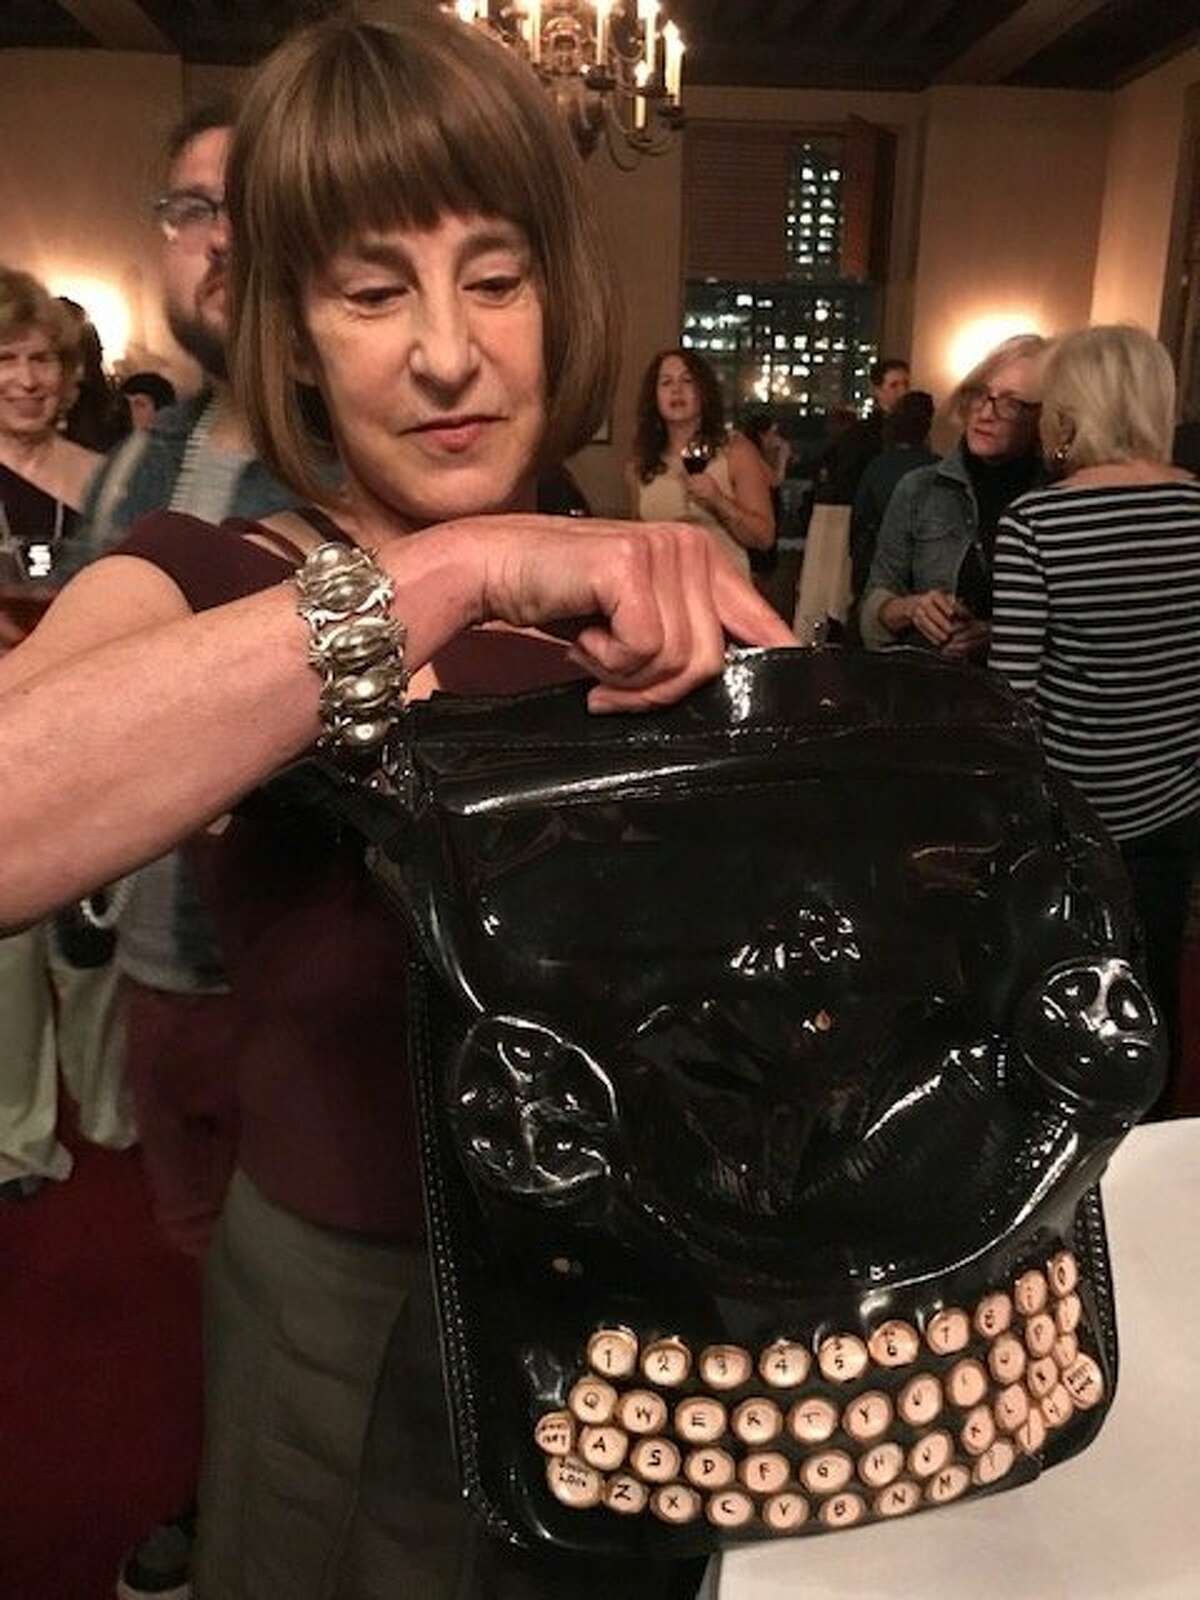 Alexandra Szerlip with typewriter purse, at Litquake opening party